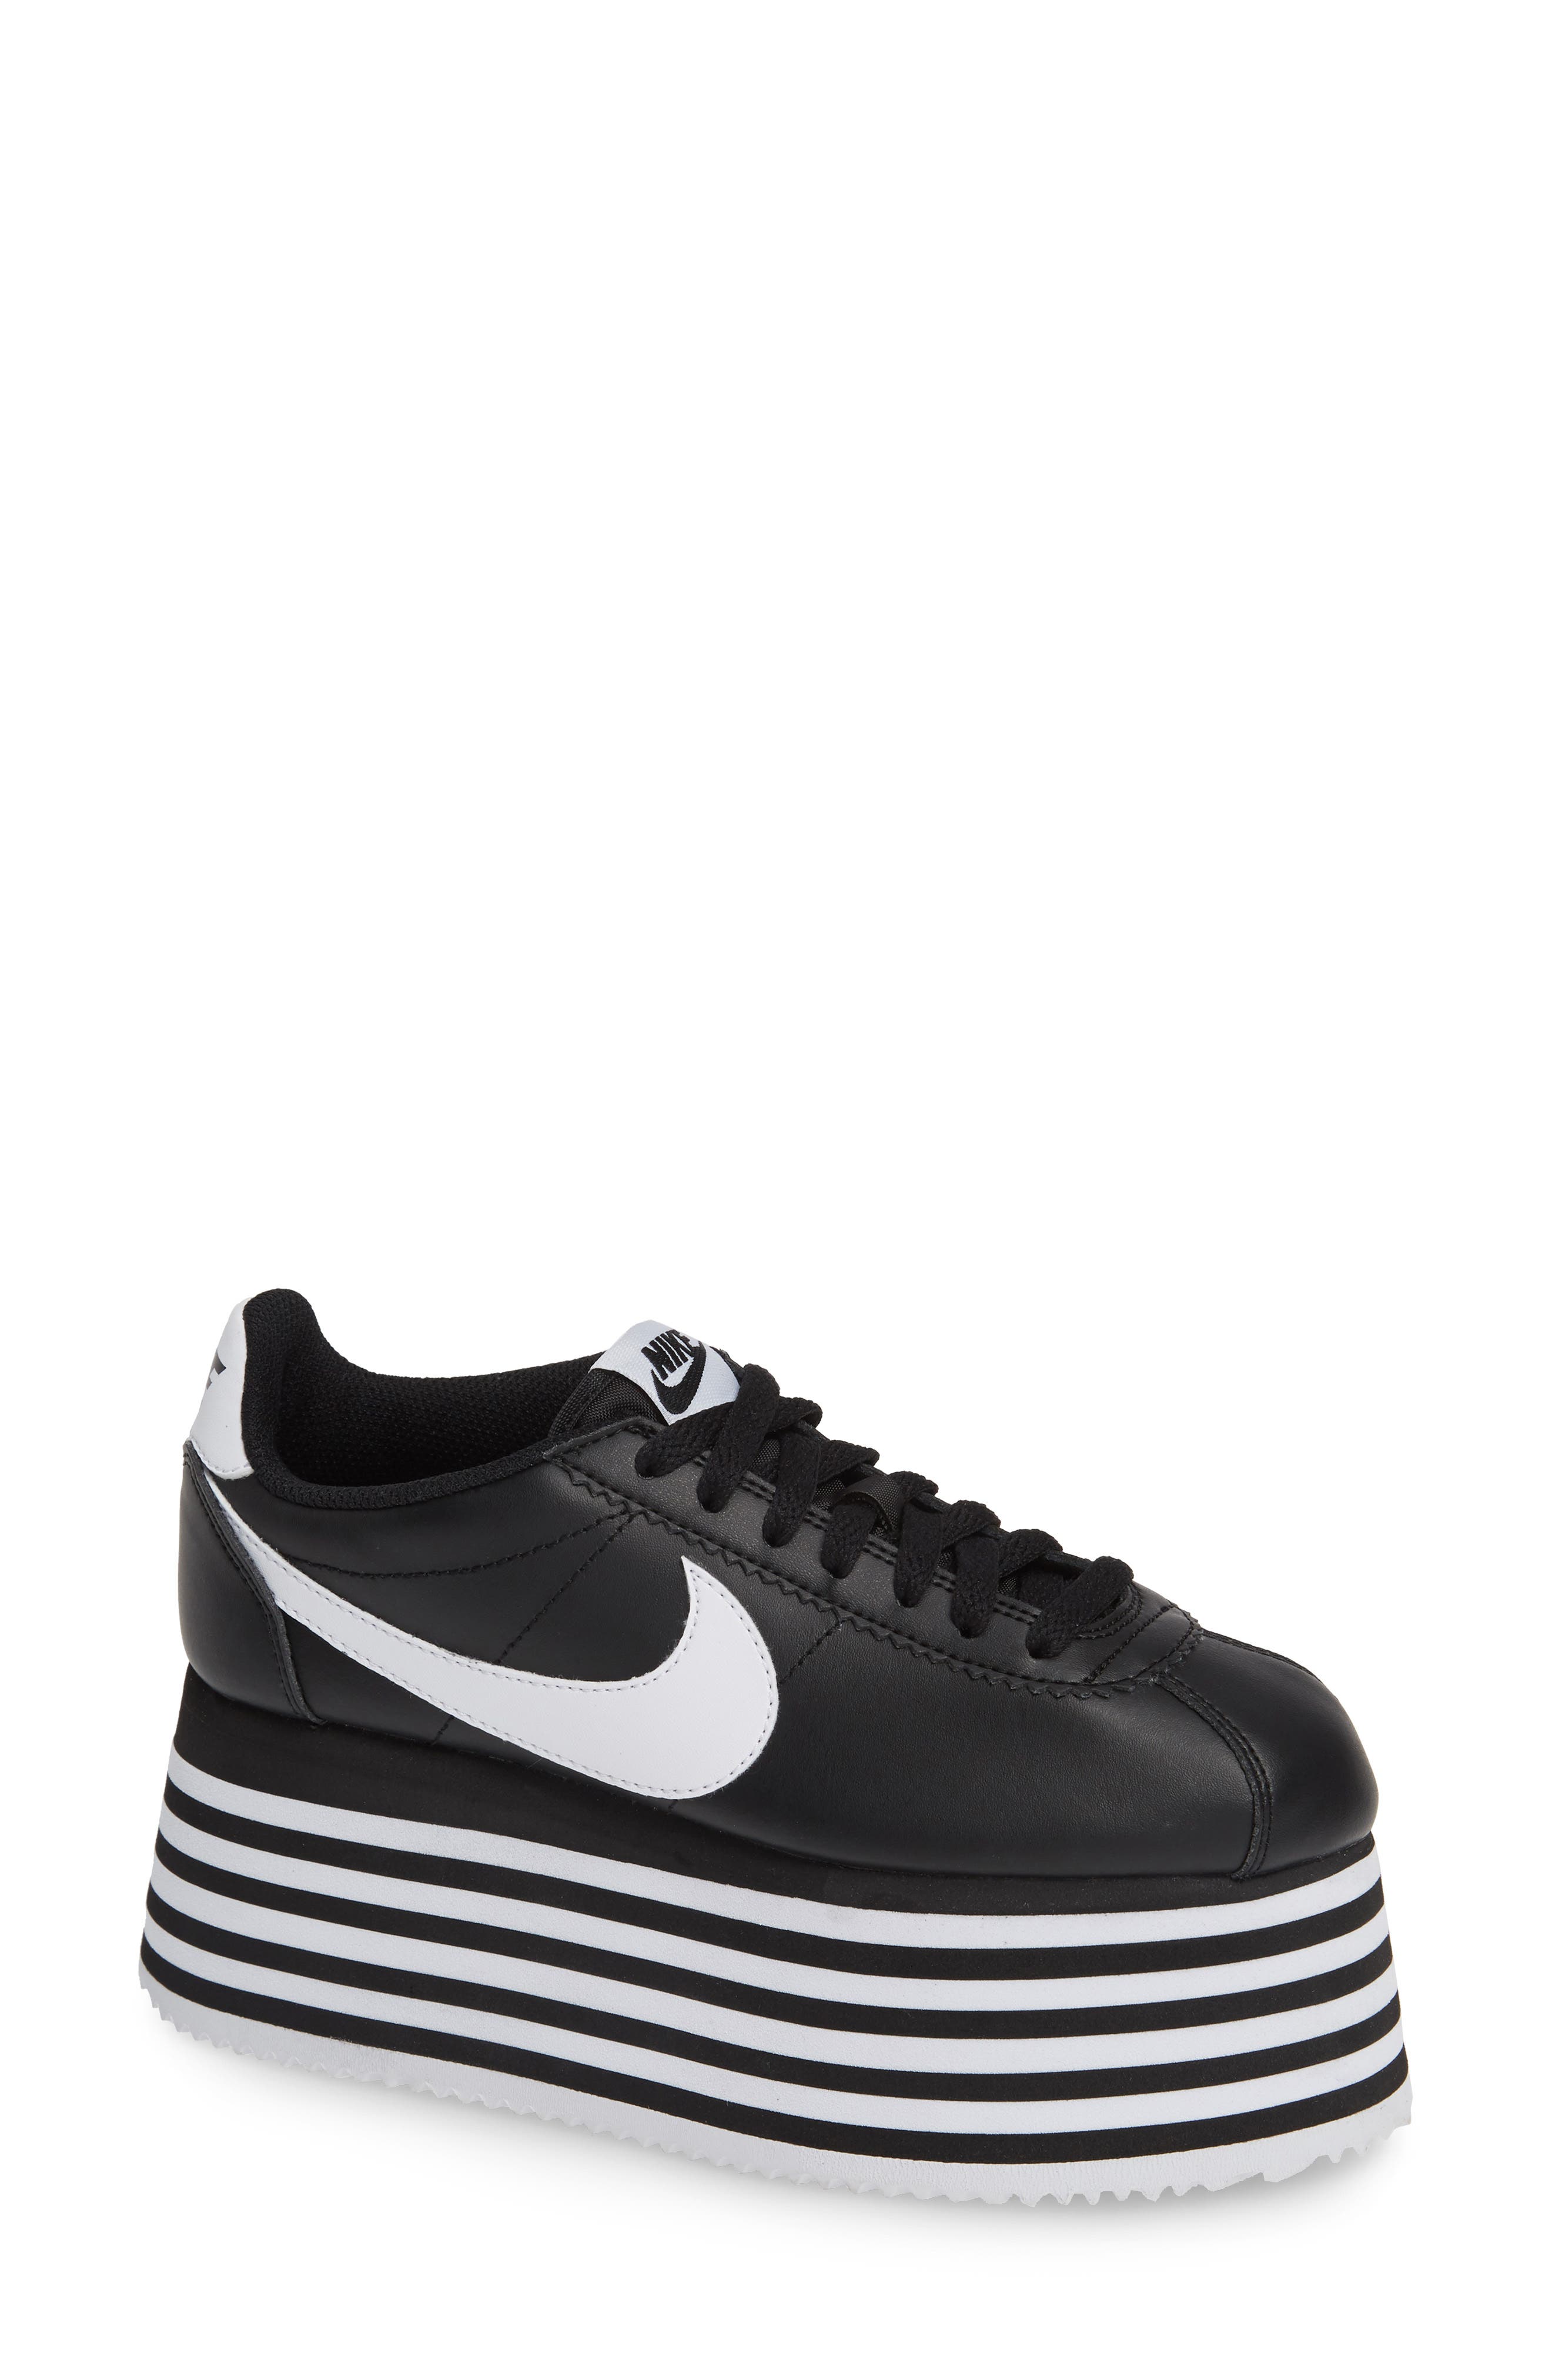 nike platform sneakers black and white